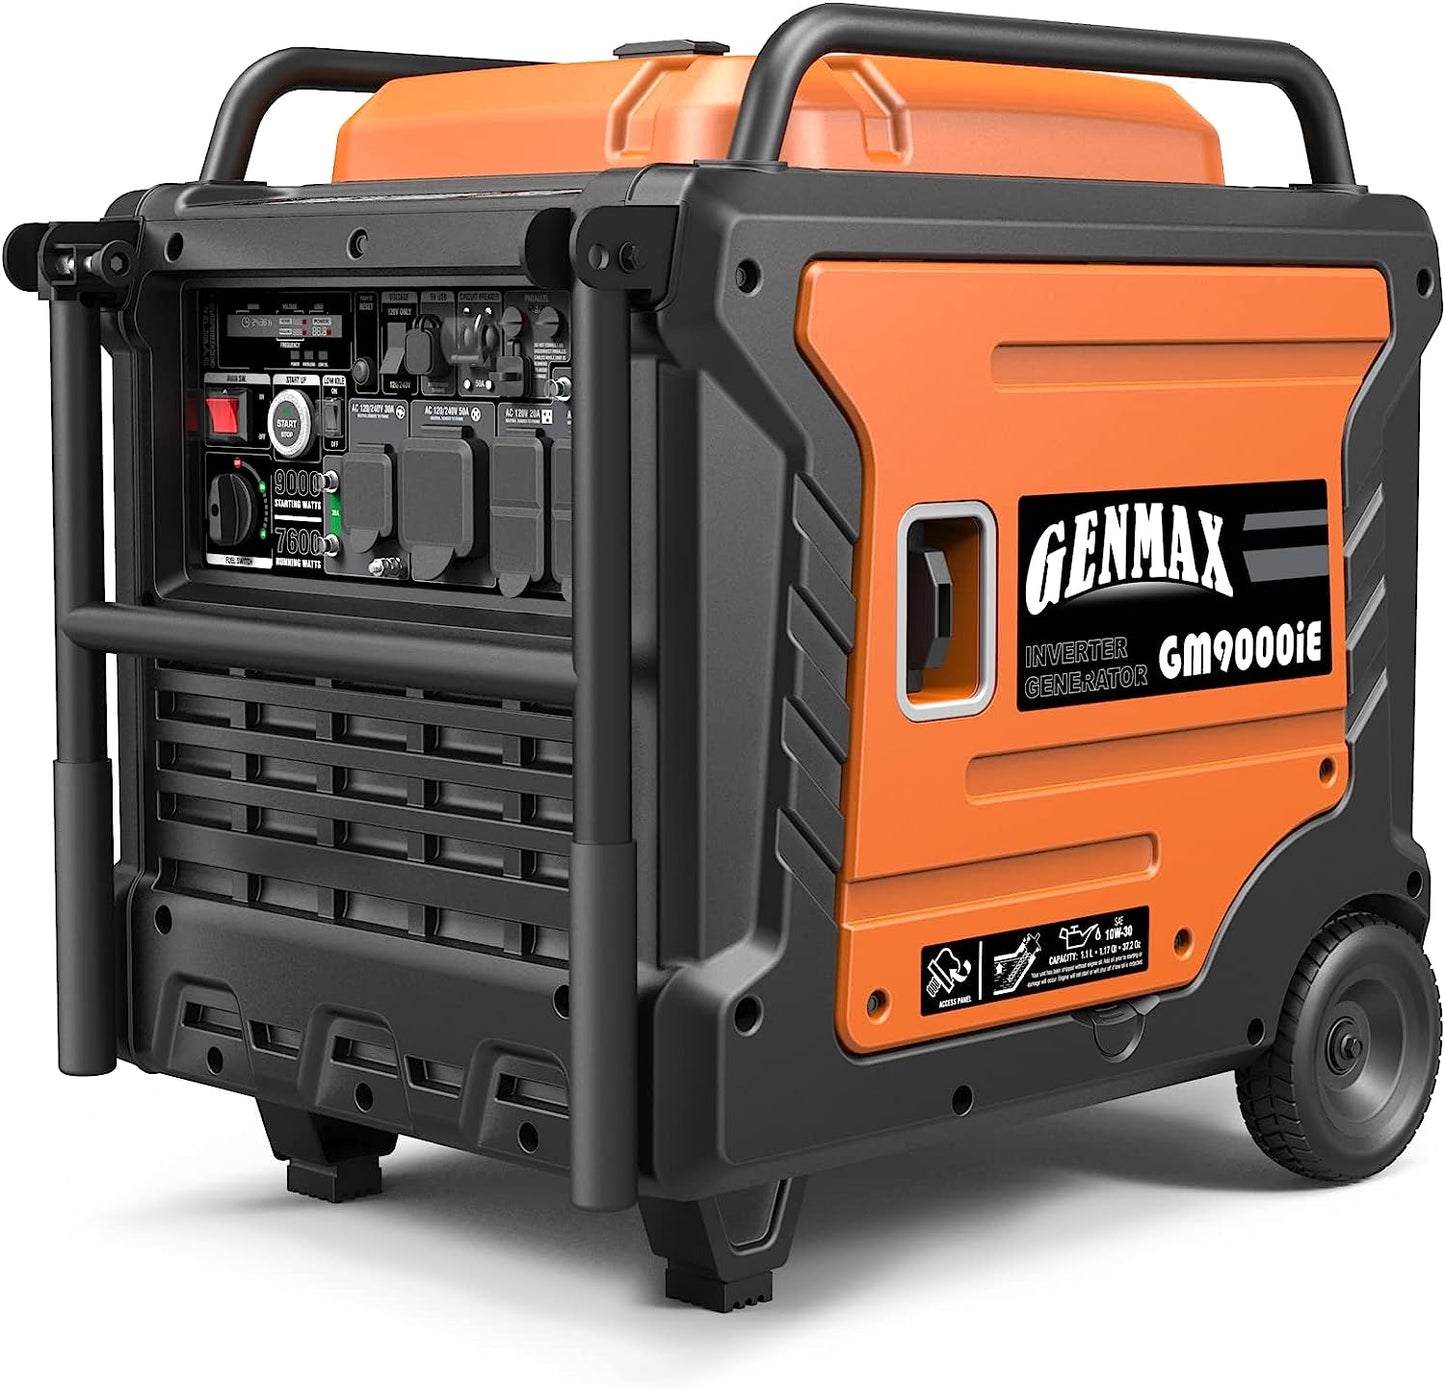 GENMAX GM9000iE Portable Inverter Generator 9000W